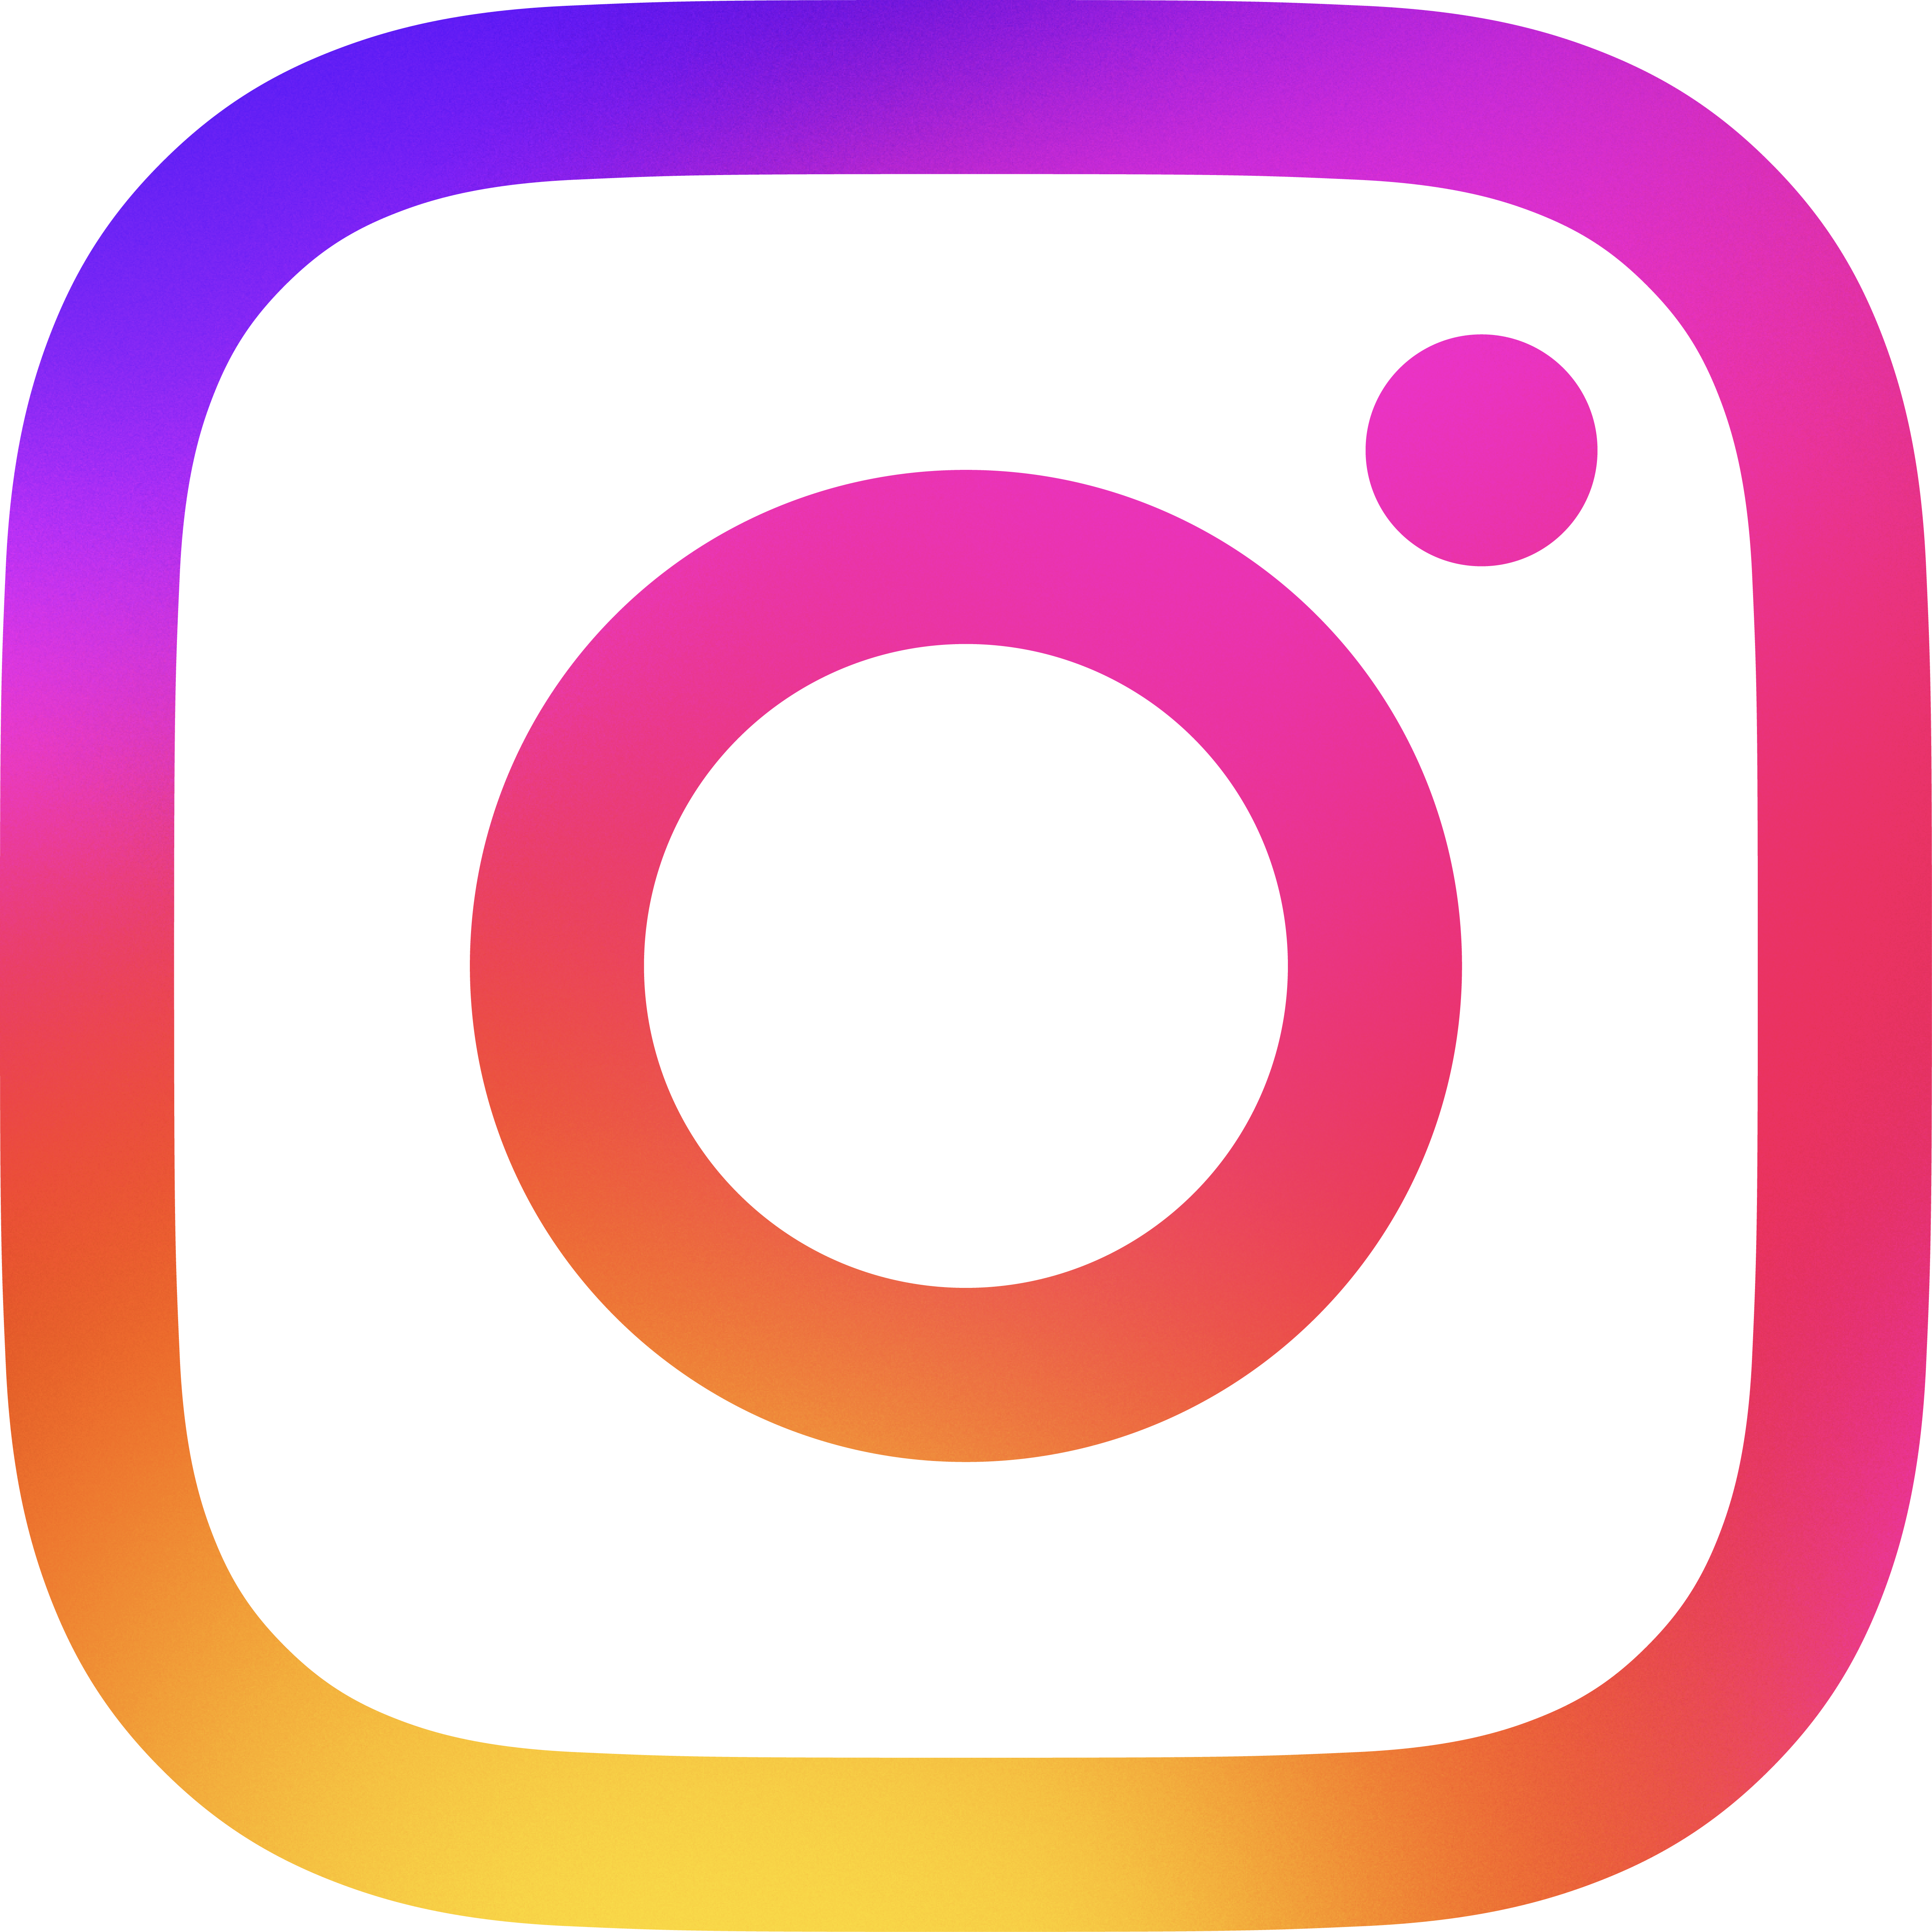 Instagram - evil, corporate, social media, but if you're already on it, please follow Mooshy. 😬